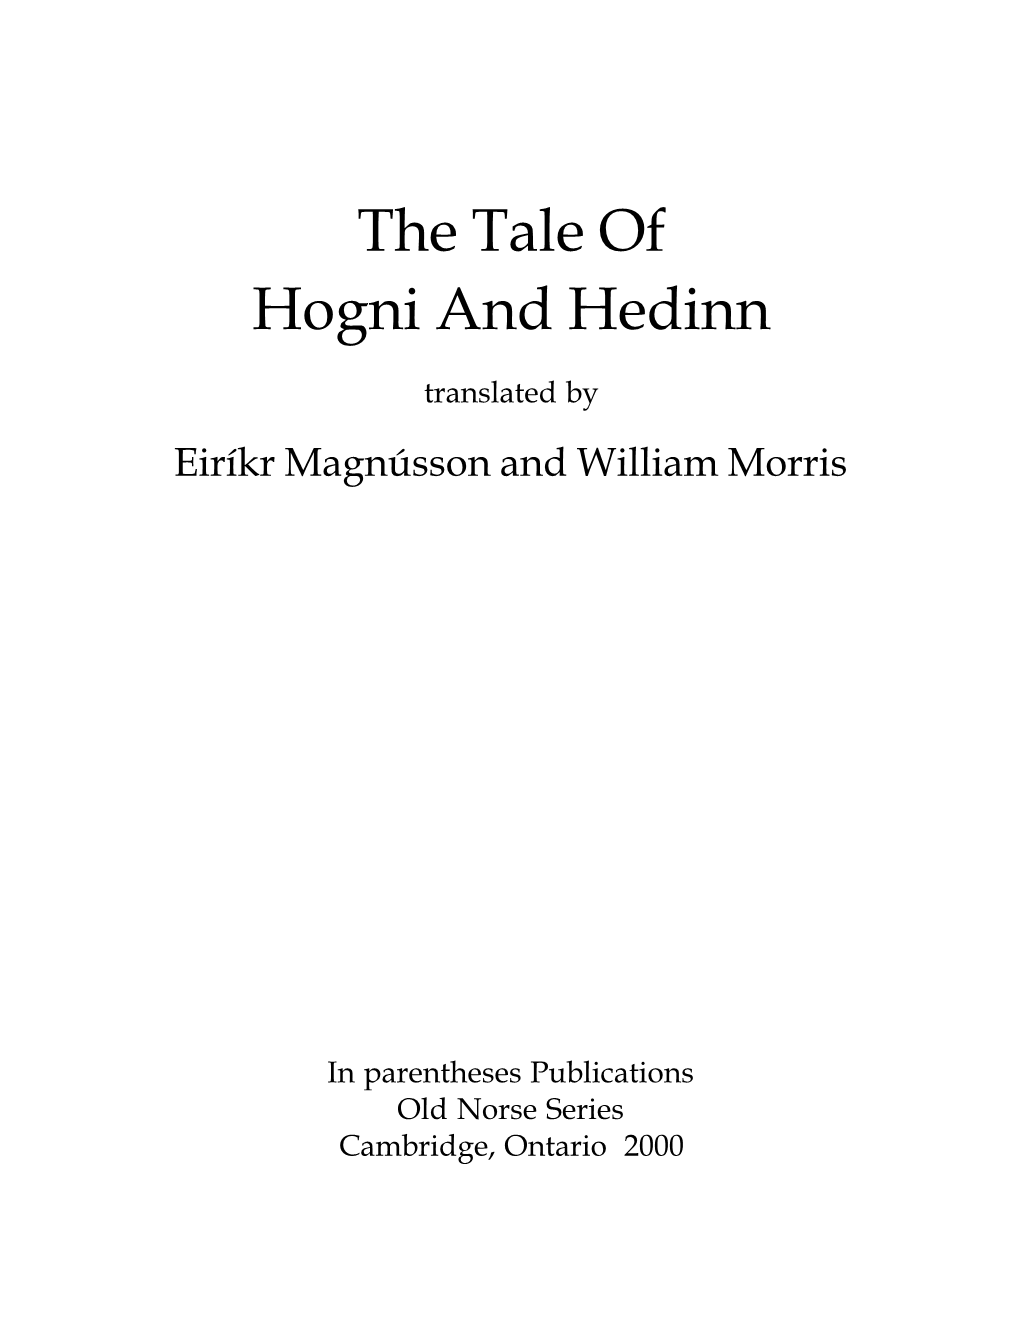 The Tale of Hogni and Hedinn